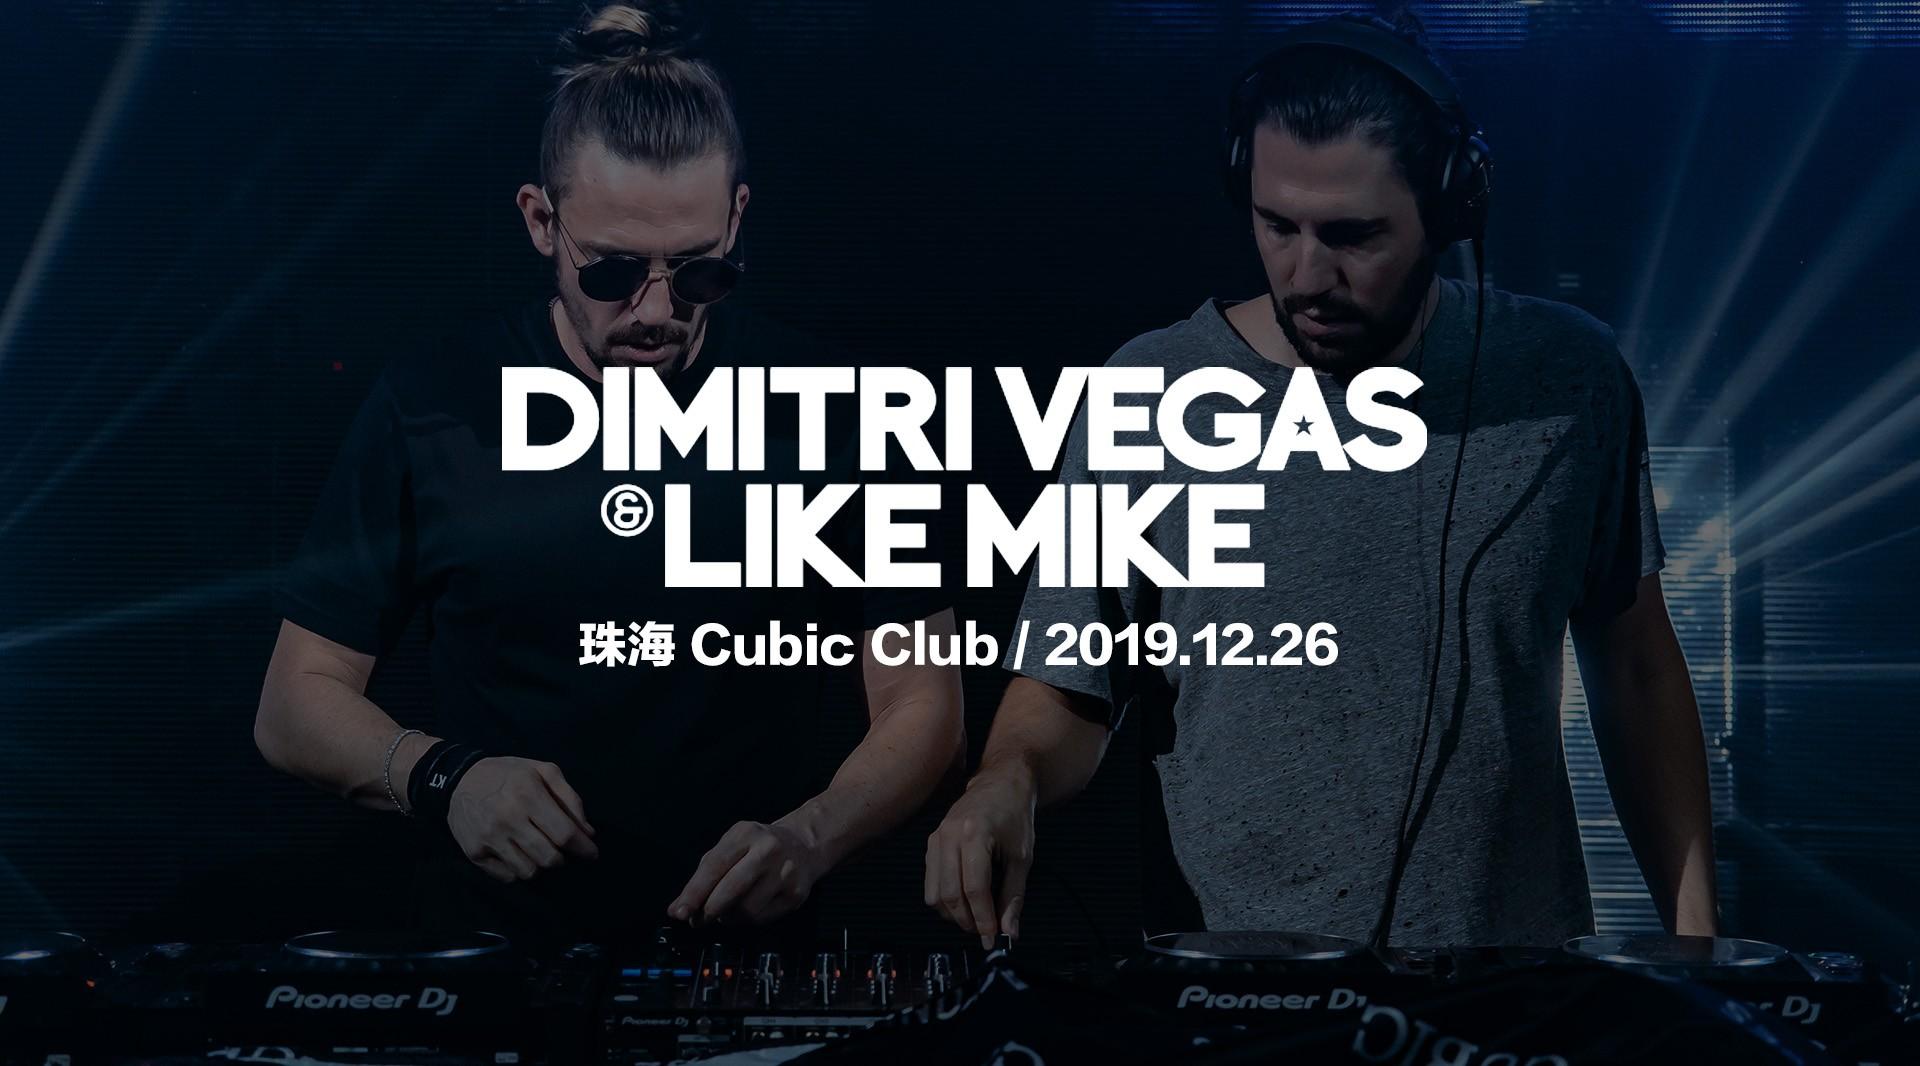 Dimitri Vegas & Like Mike 珠海Cubic Club 演出